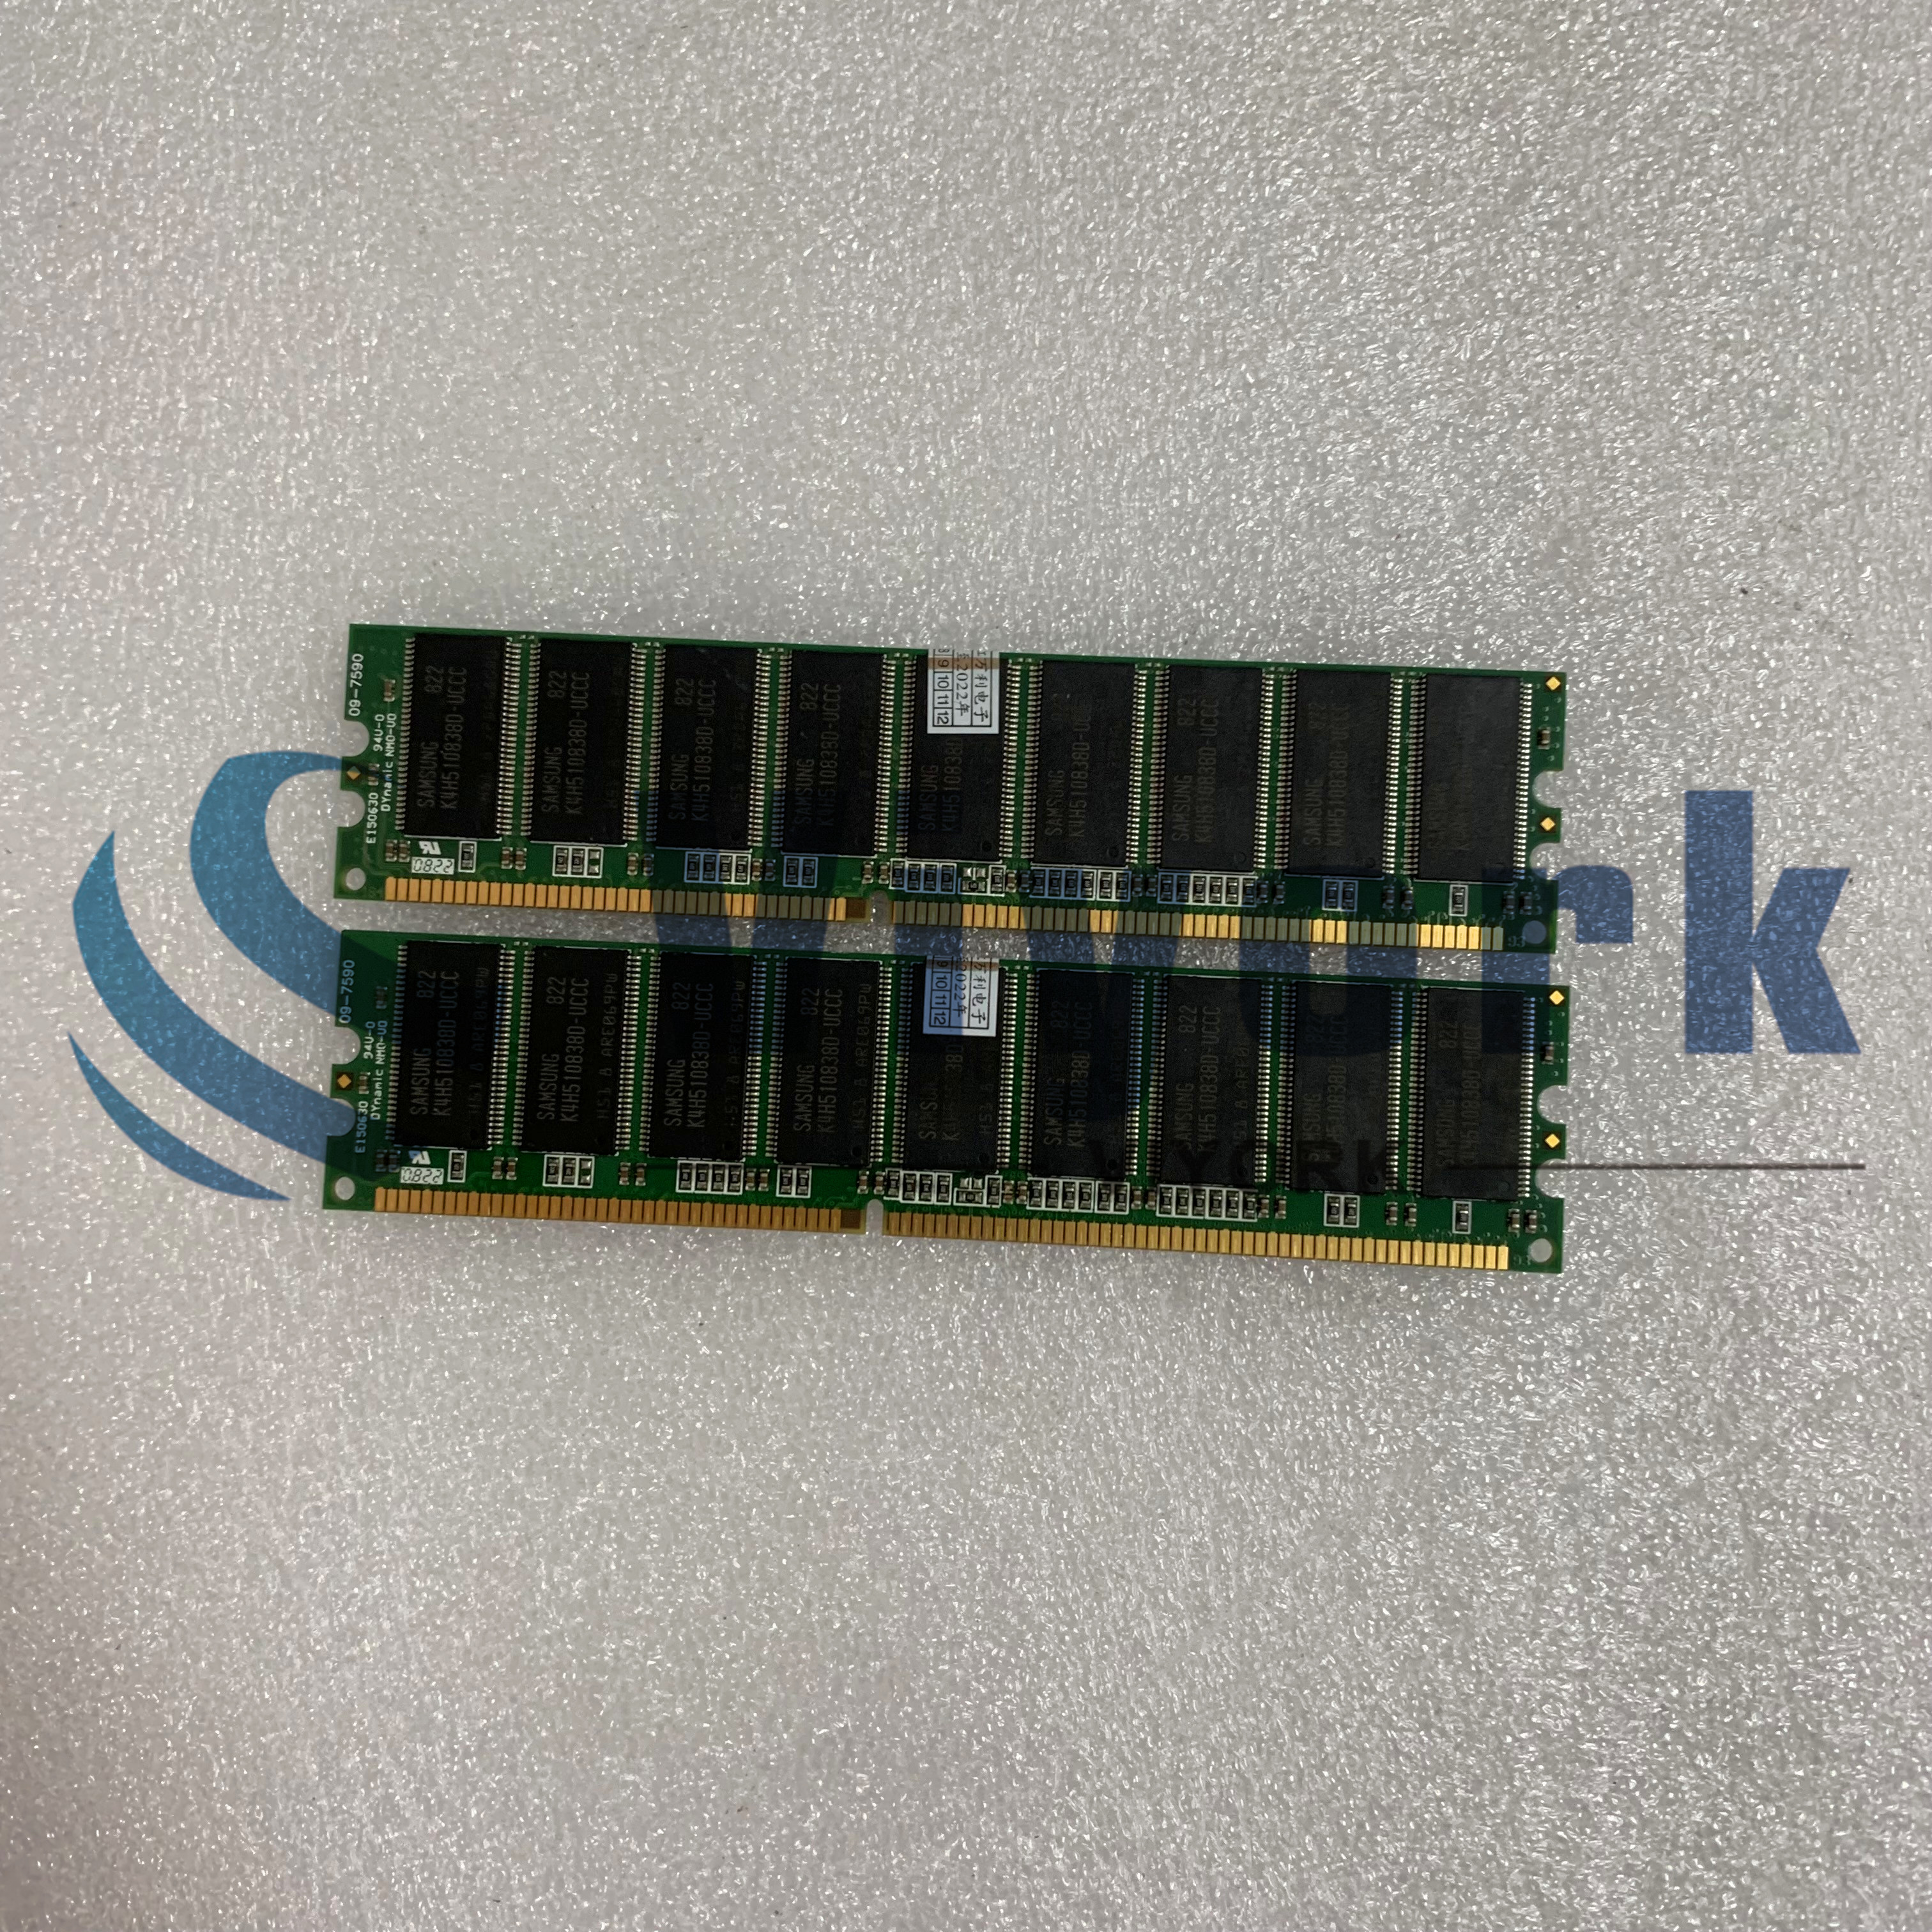 TRANSCEND DDR333 PC MEMORY CARD 512MB 184PIN